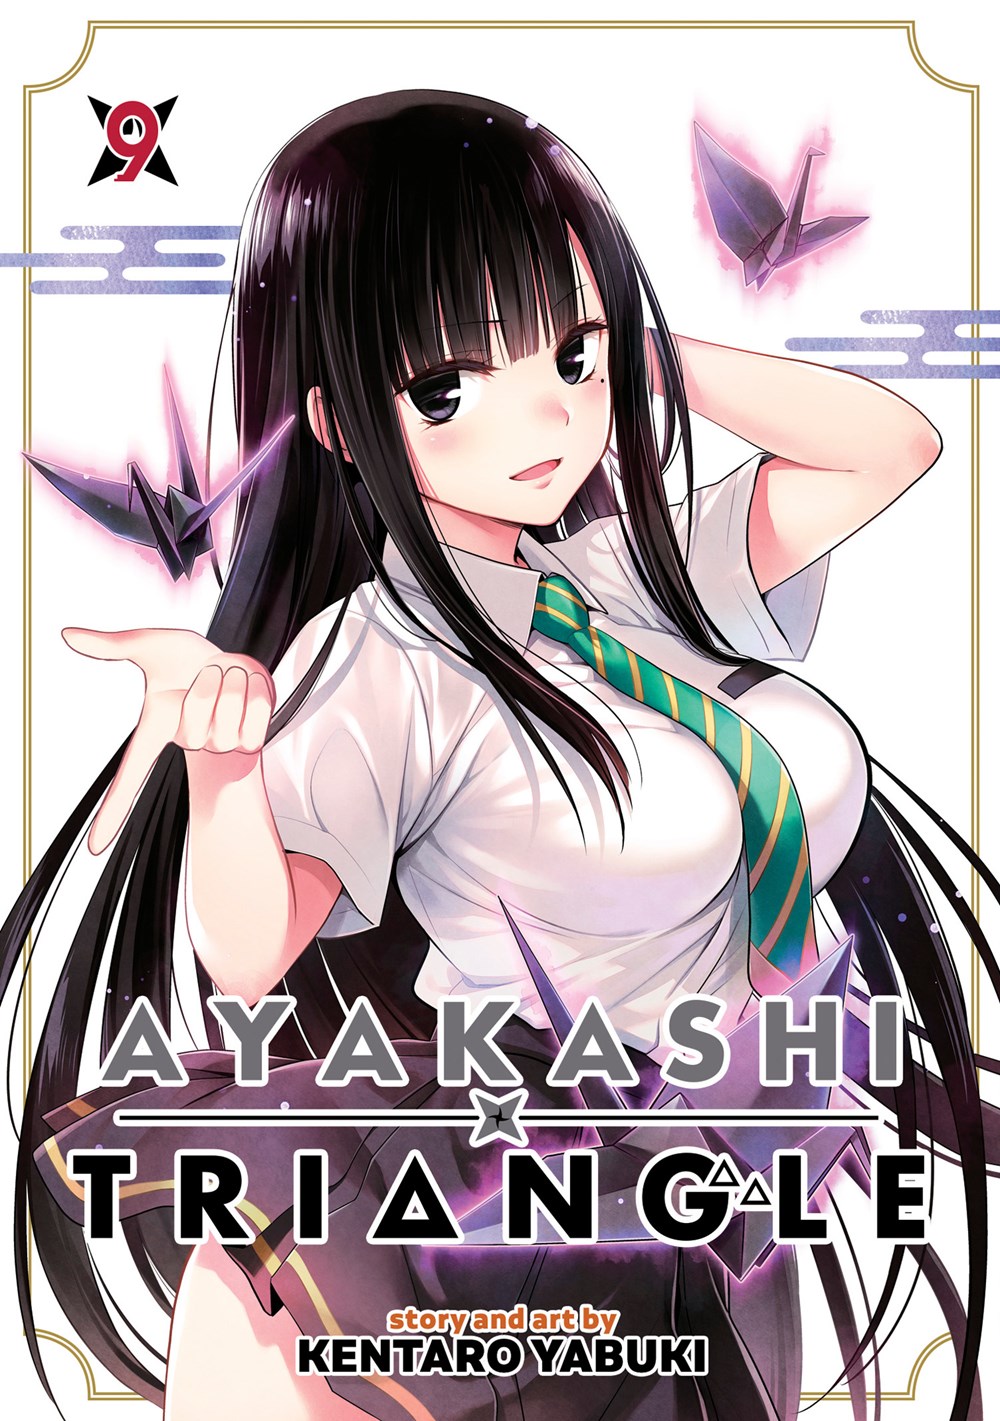 Ayakashi Triangle Manga Volume Crunchyroll Store, 43% OFF